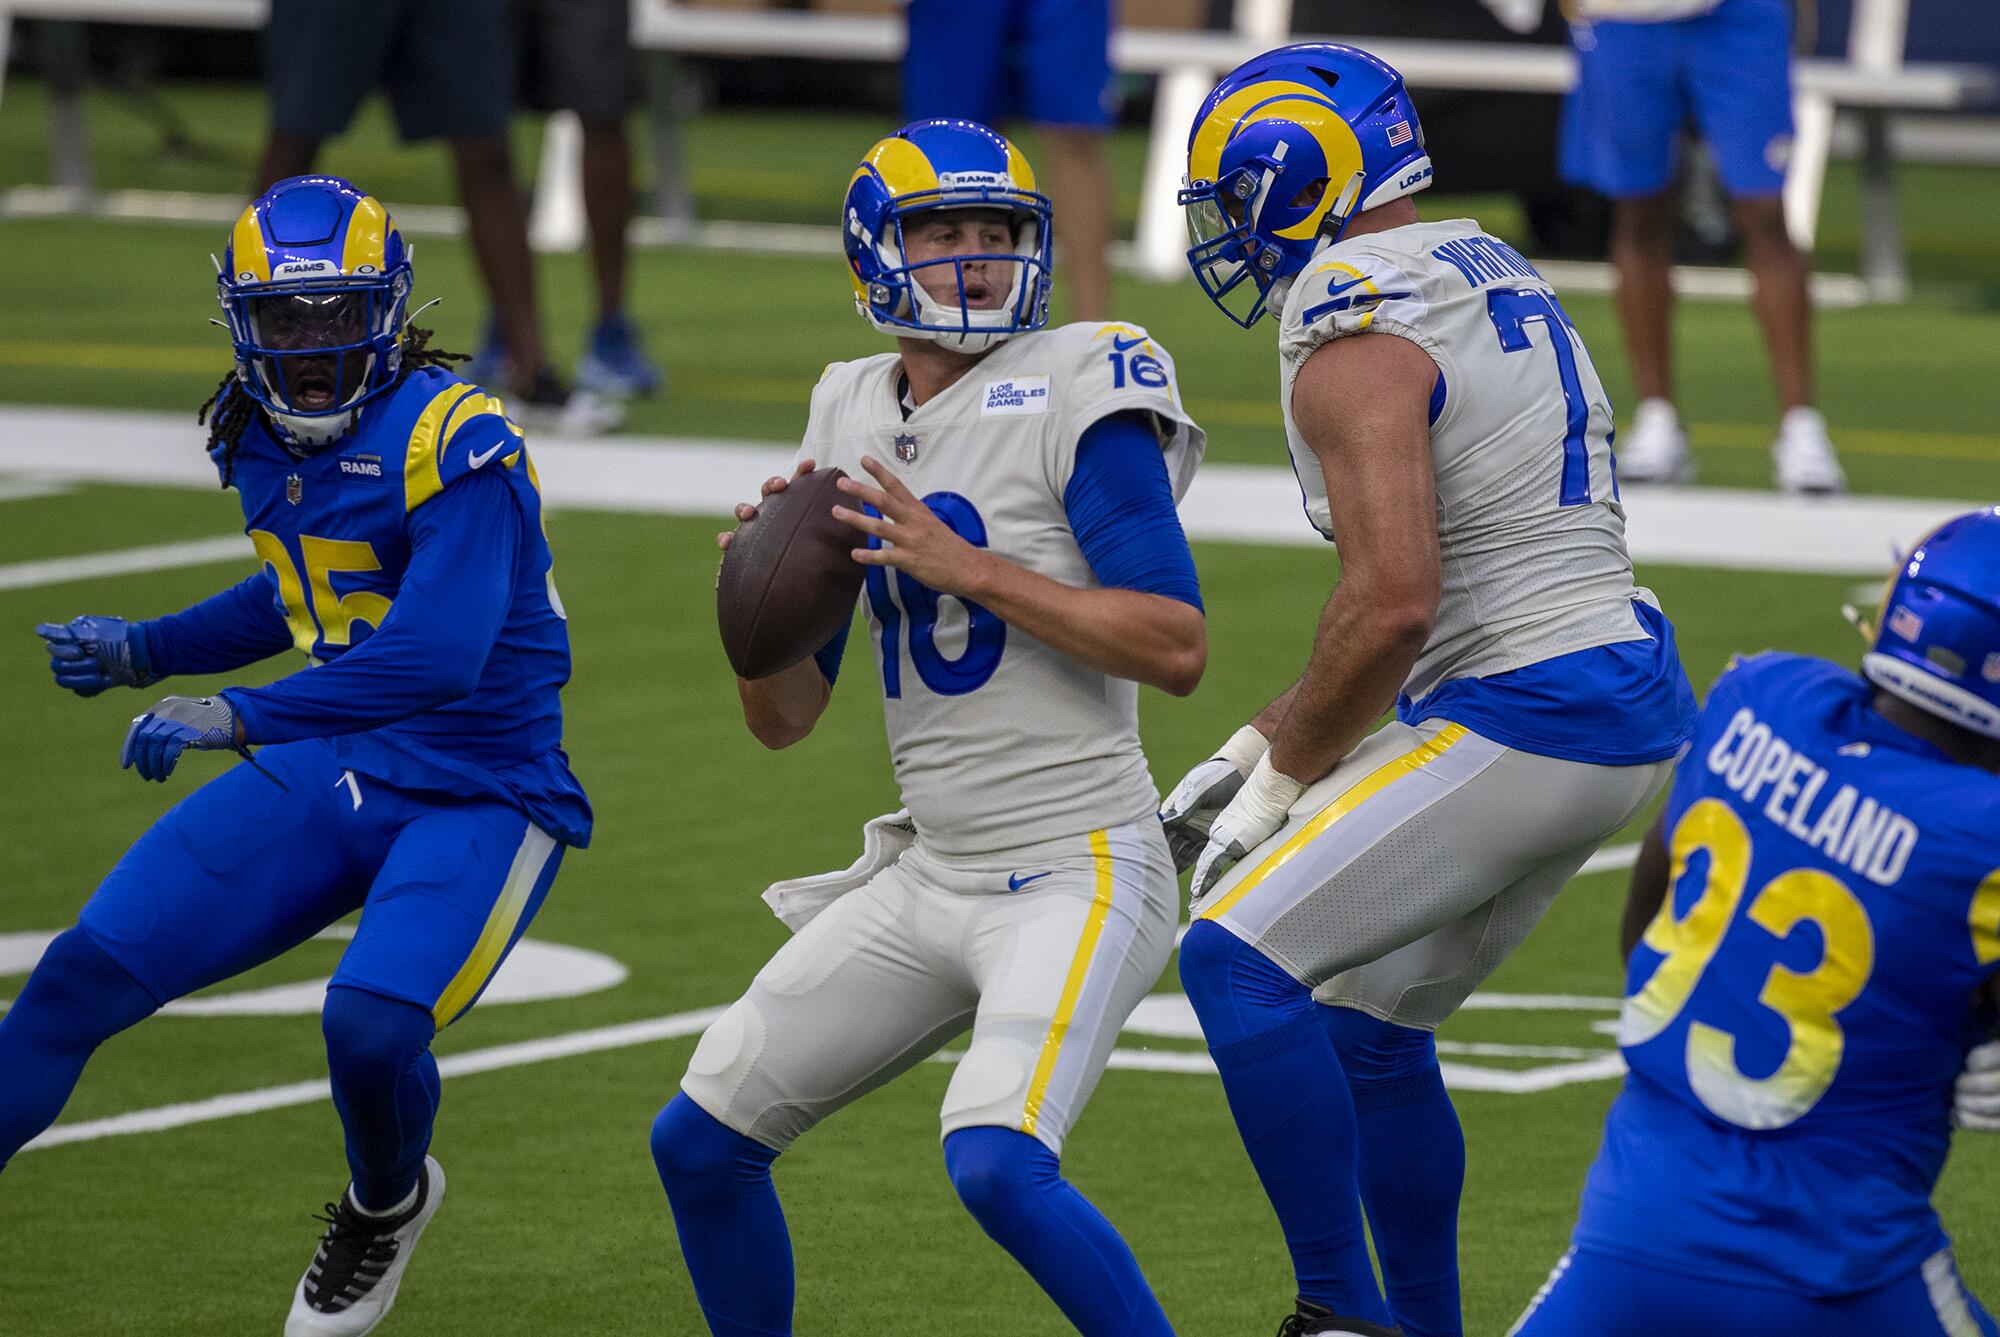 Rams quarterback Jared Goff looks to pass during scrimmage at SoFi Stadium on Aug. 22.